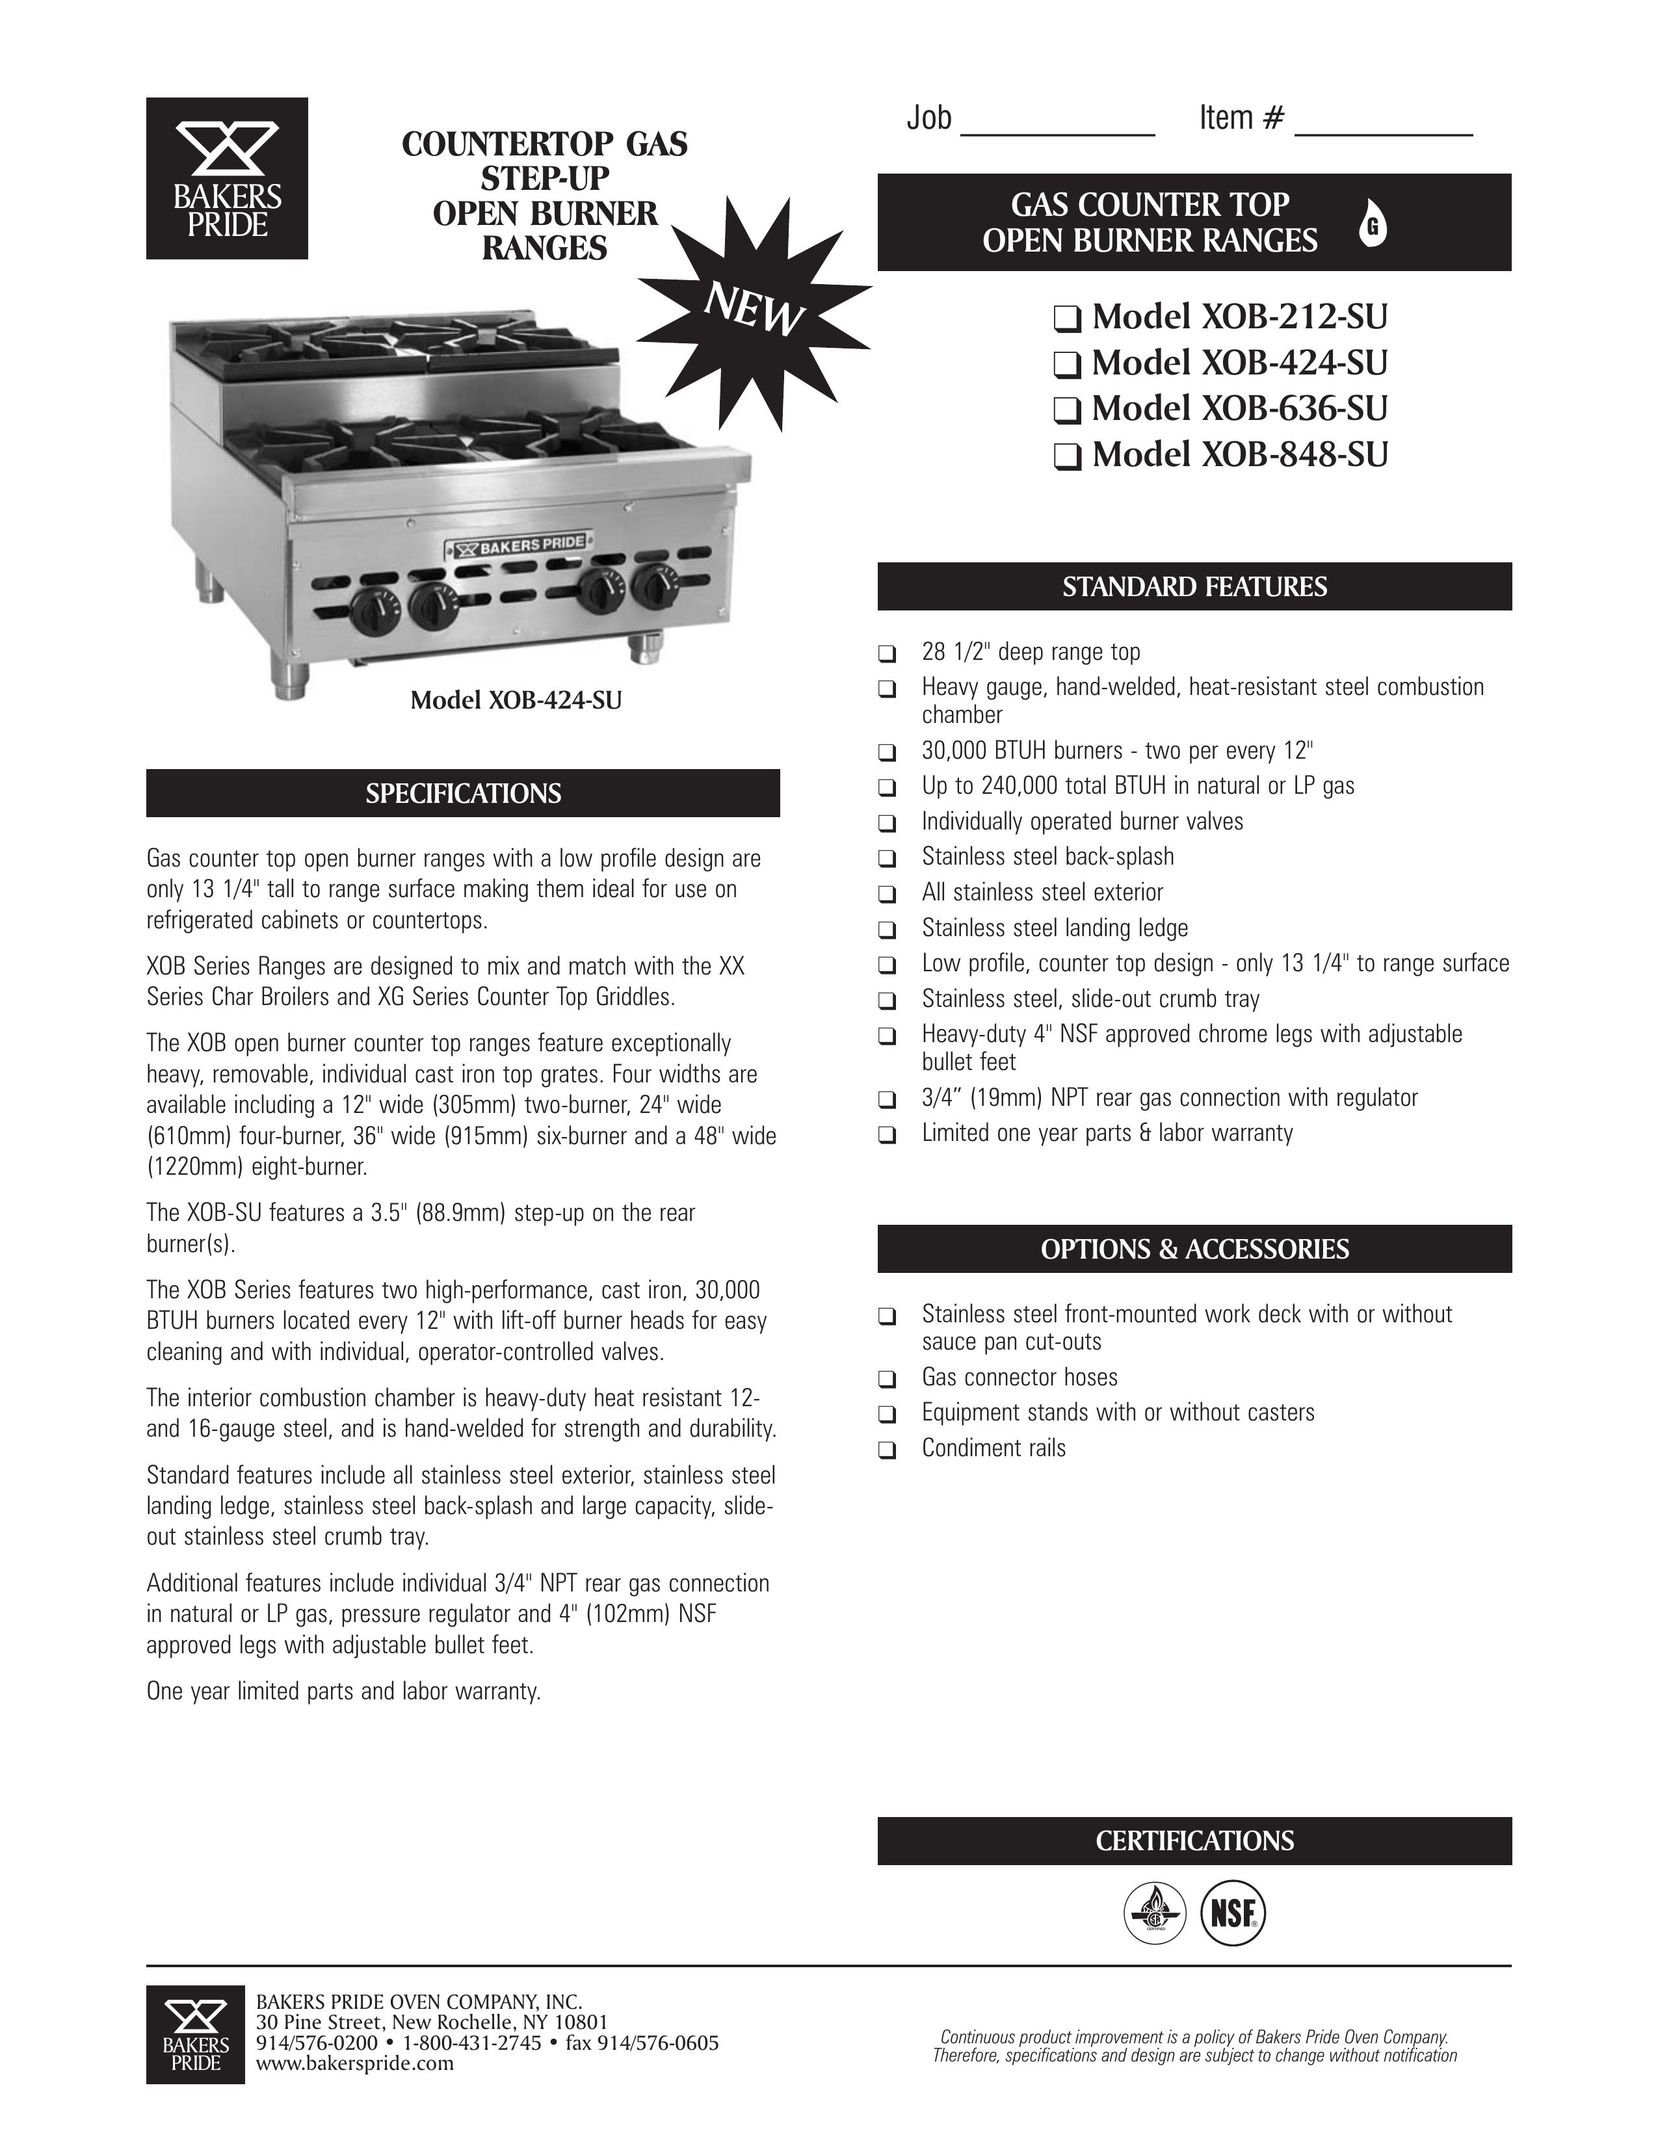 Bakers Pride Oven XOB-212-SU Range User Manual